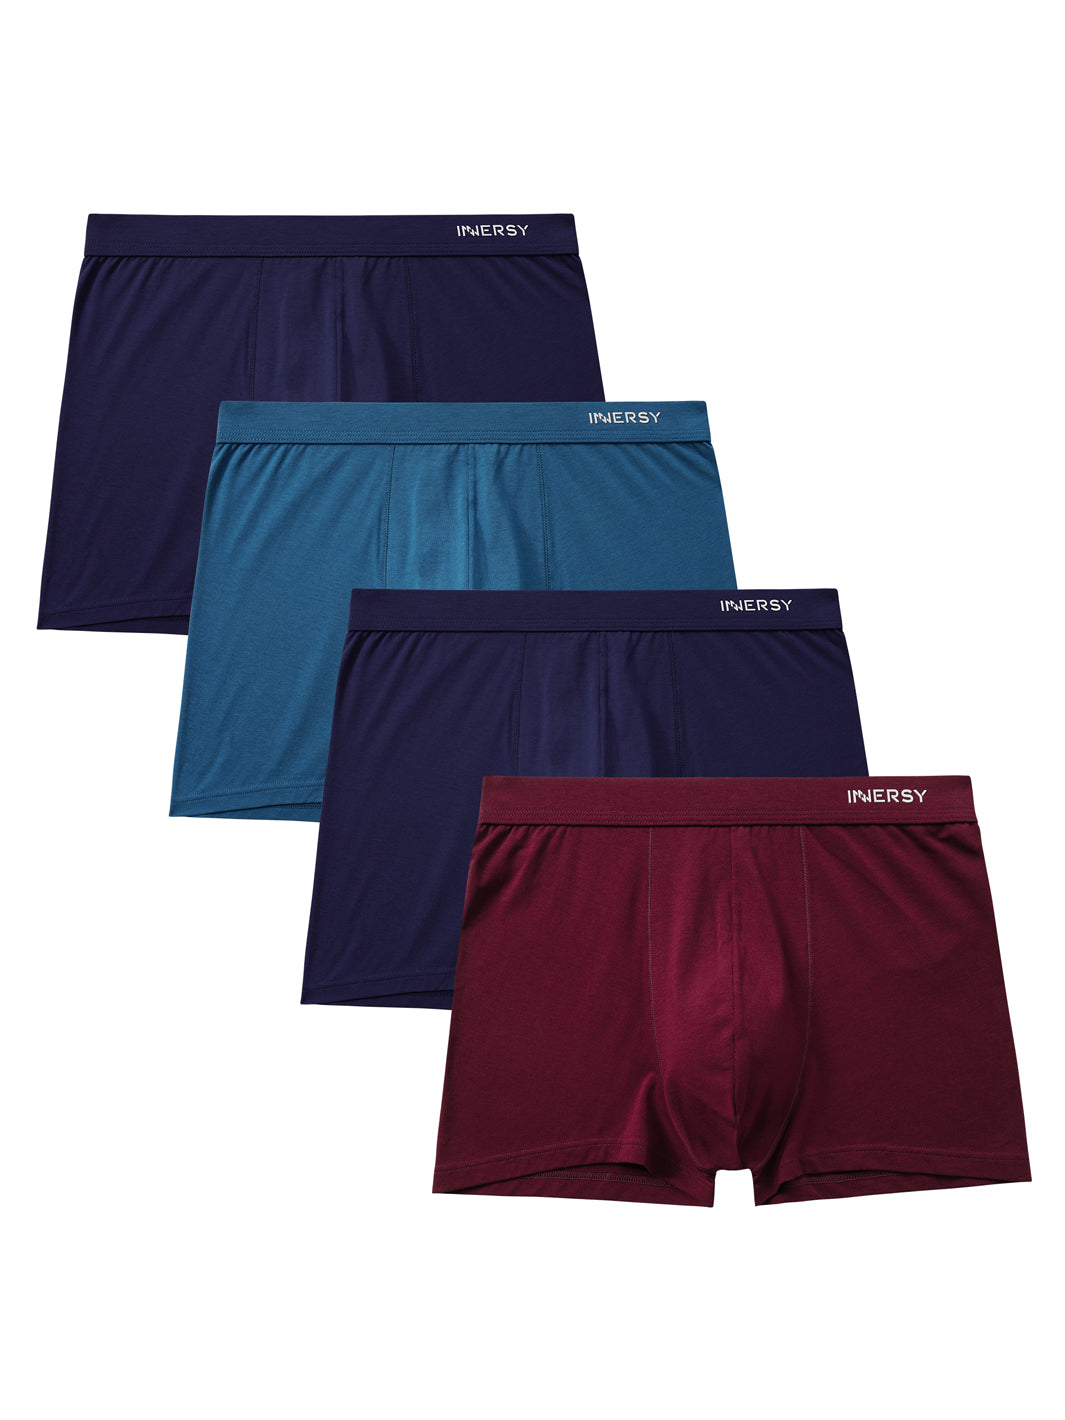 INNERSY Ladies Boxer Shorts Underwear Cotton Boyshorts for Women Midi Short  Knickers Pack of 3 (8, 2 Checkerboard/1 Geometric) : : Fashion